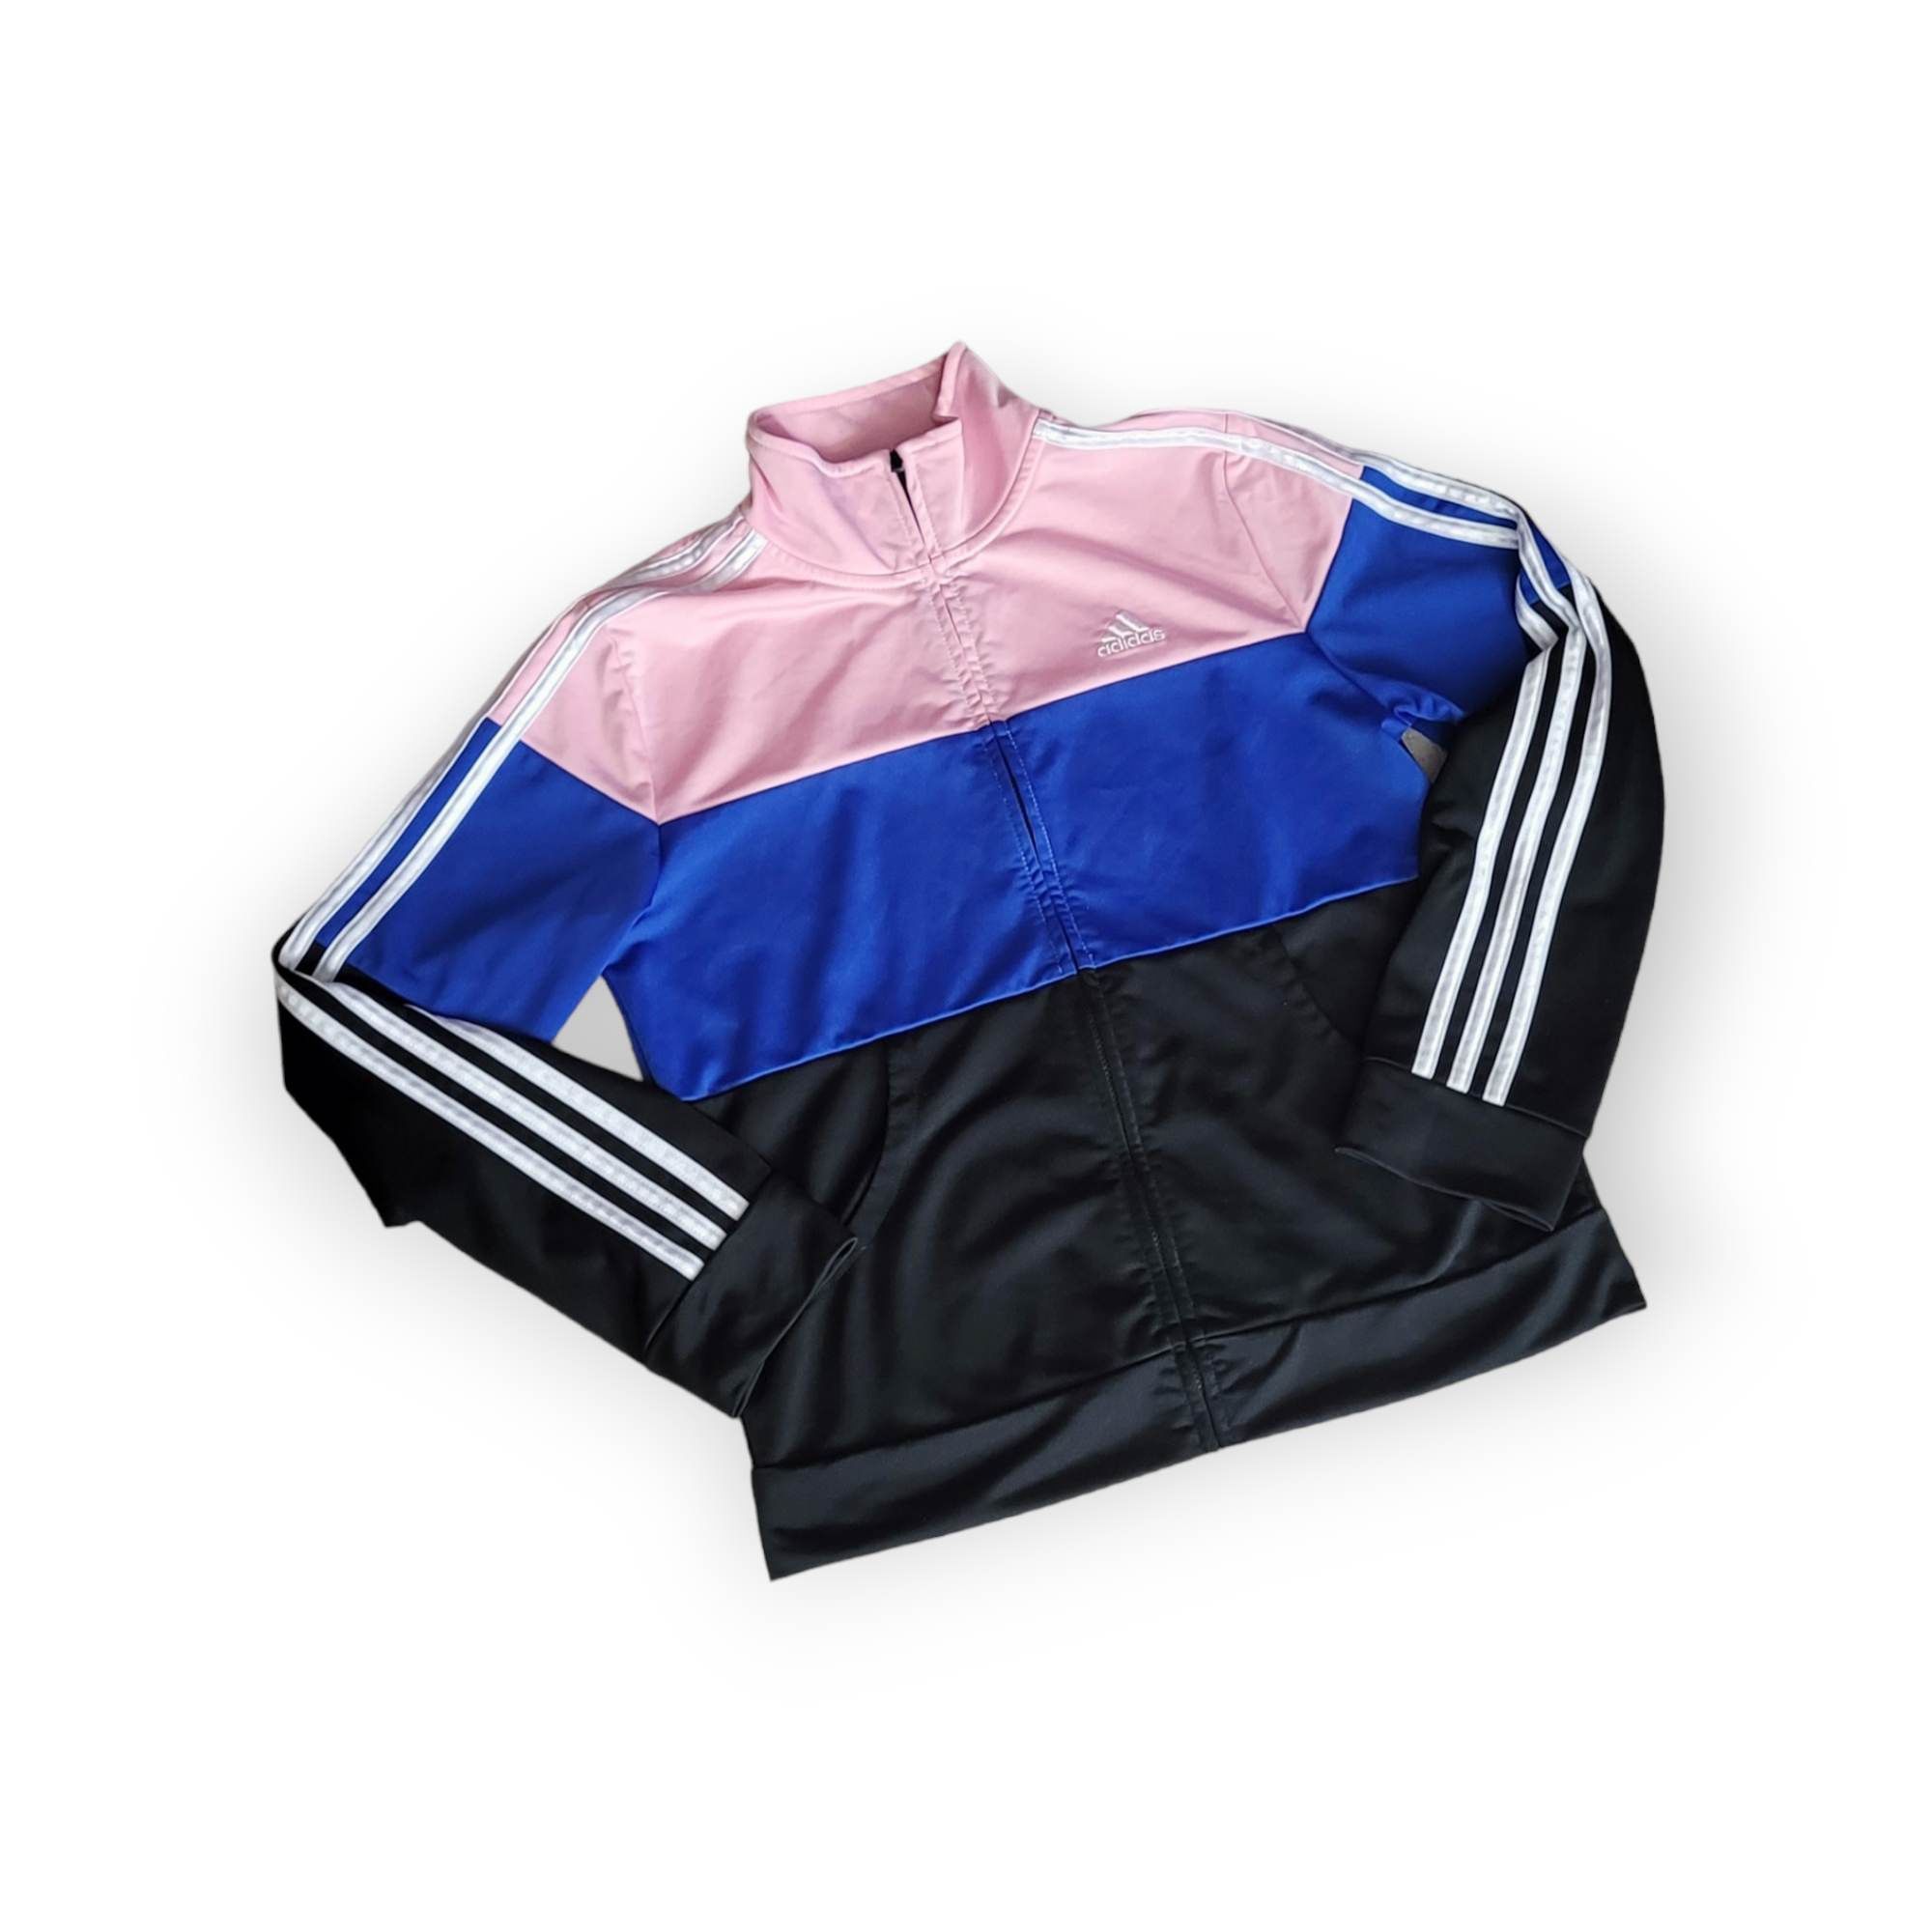 Usa Adidas 16lat bluza orginalna bloger style lampasy